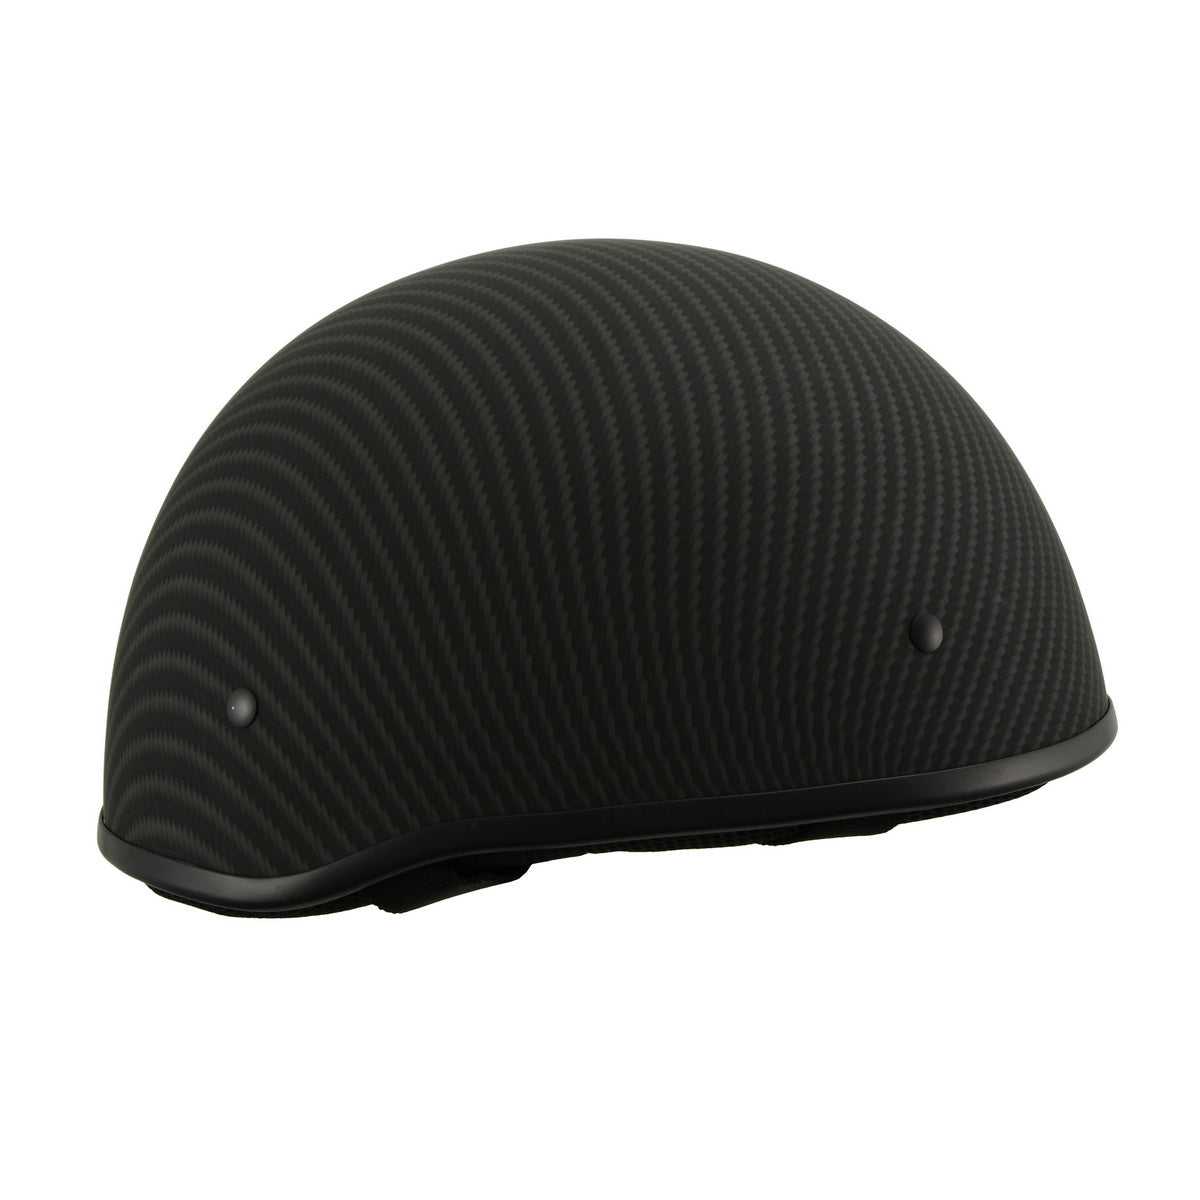 Milwaukee Performance Helmets MPH9712DOT Dot Approved Matte Black Half Motorcycle Helmet for Men and Women Biker with Carbon Fiber Look